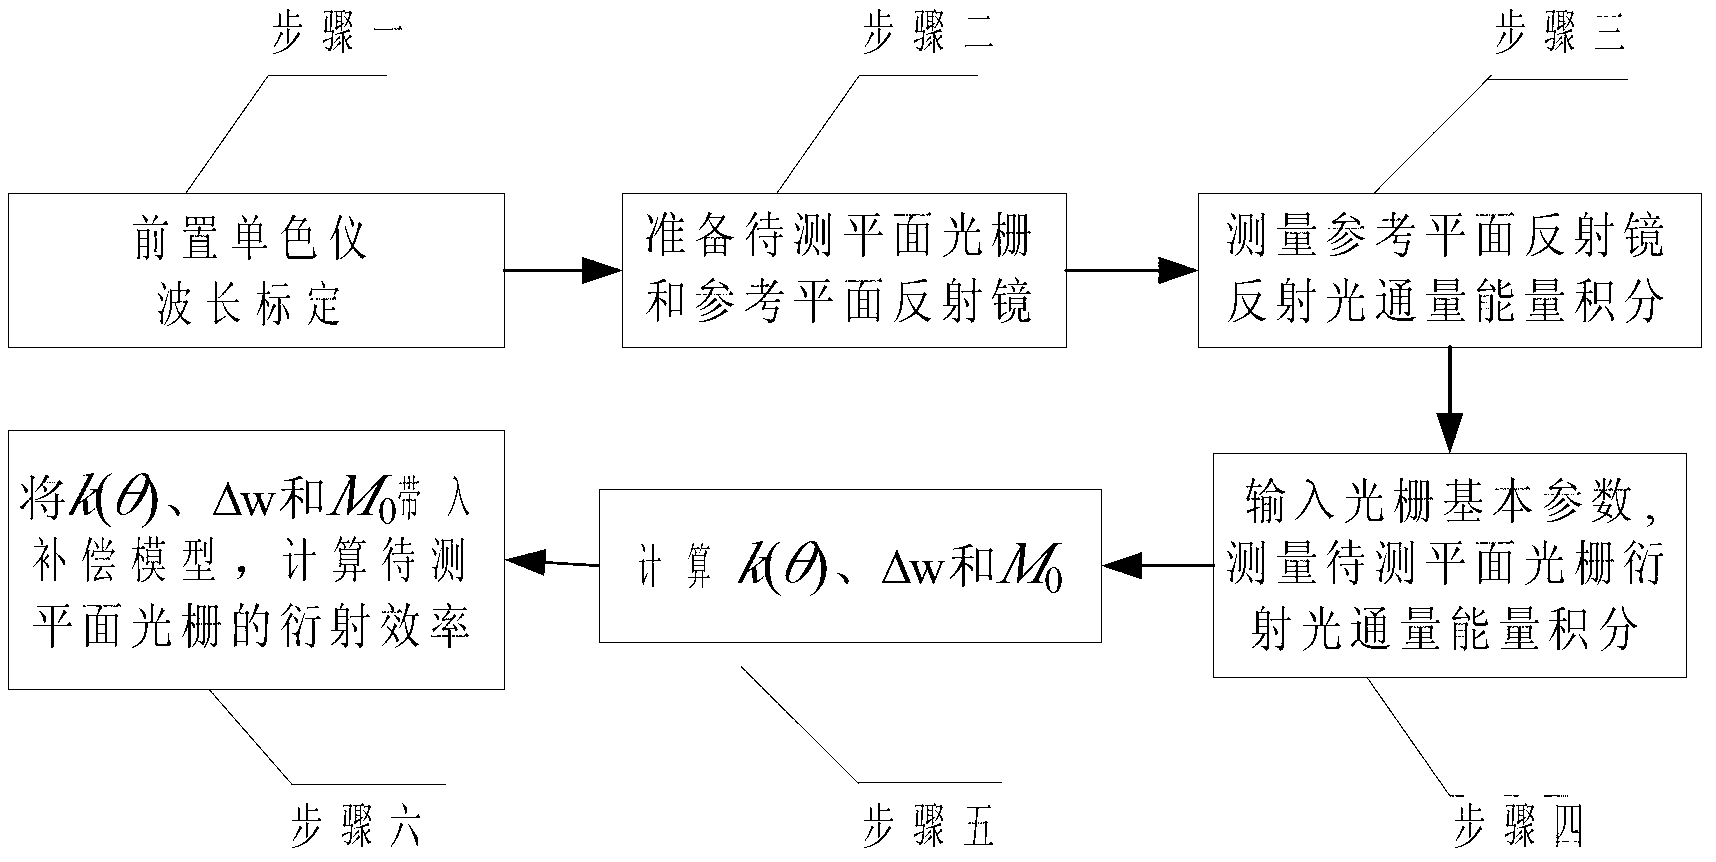 Method for measuring grating diffraction efficiency based on compensation algorithm